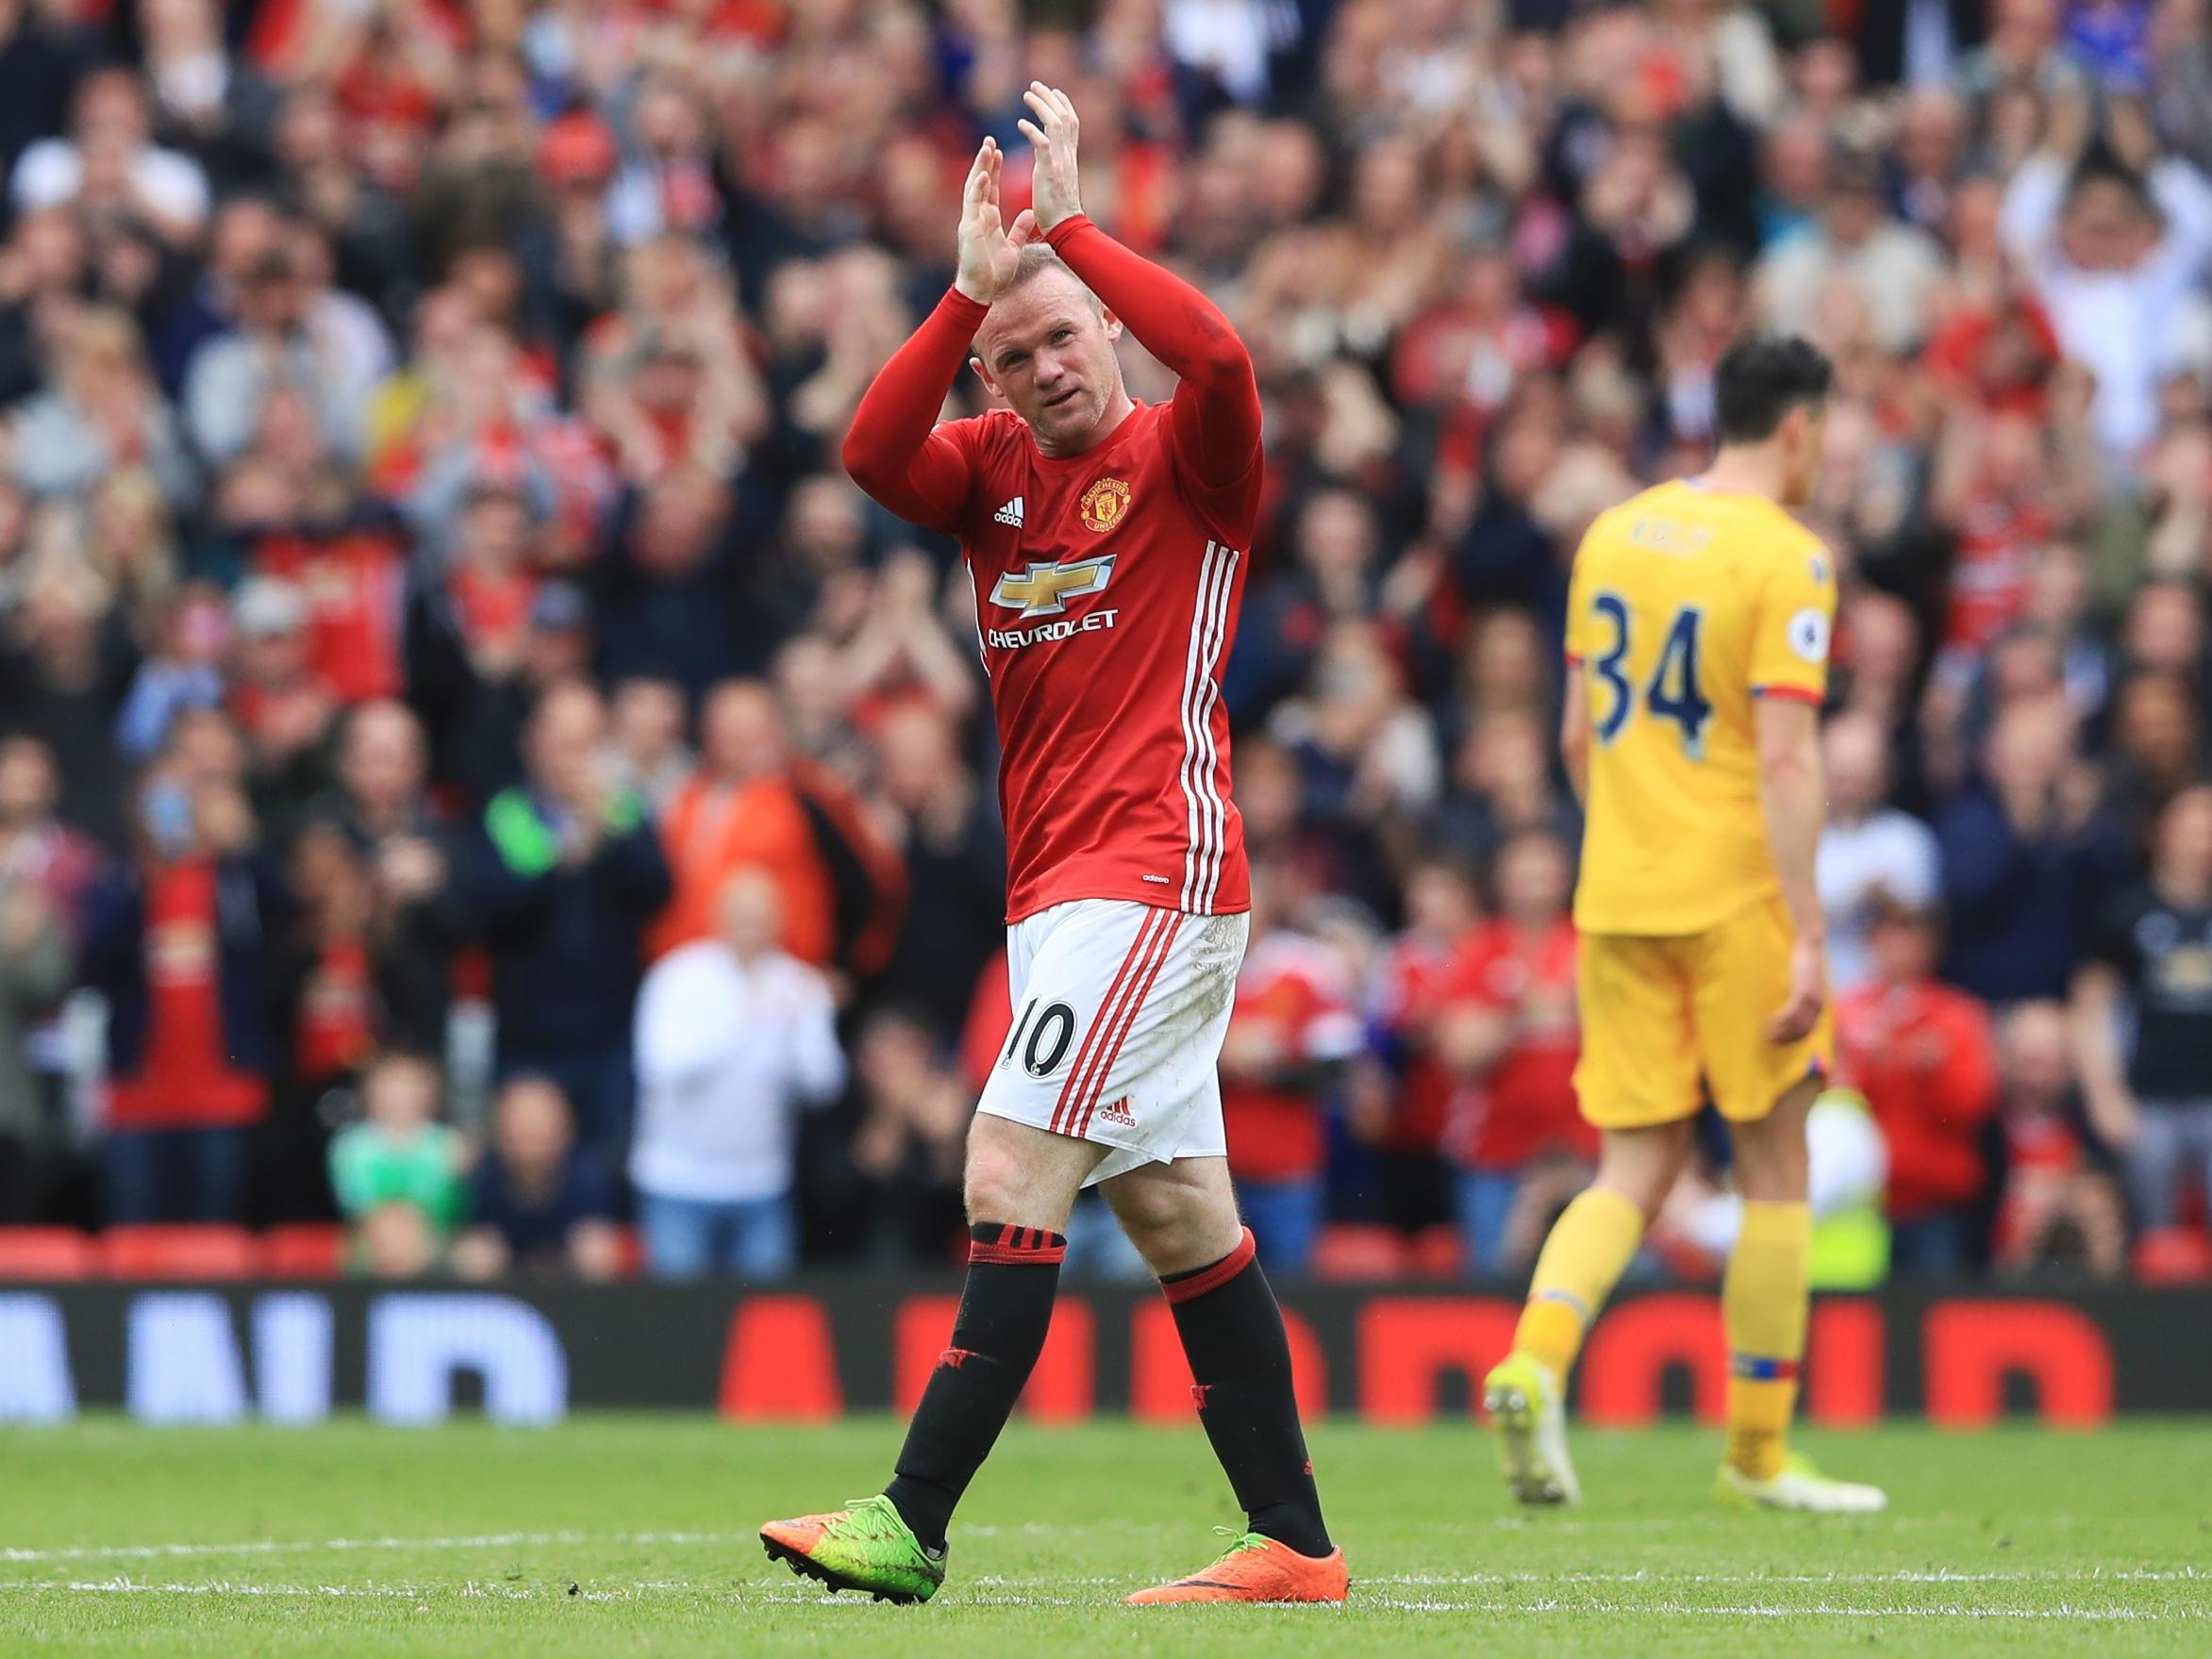 Rooney left United to rejoin boyhood club Everton in 2017